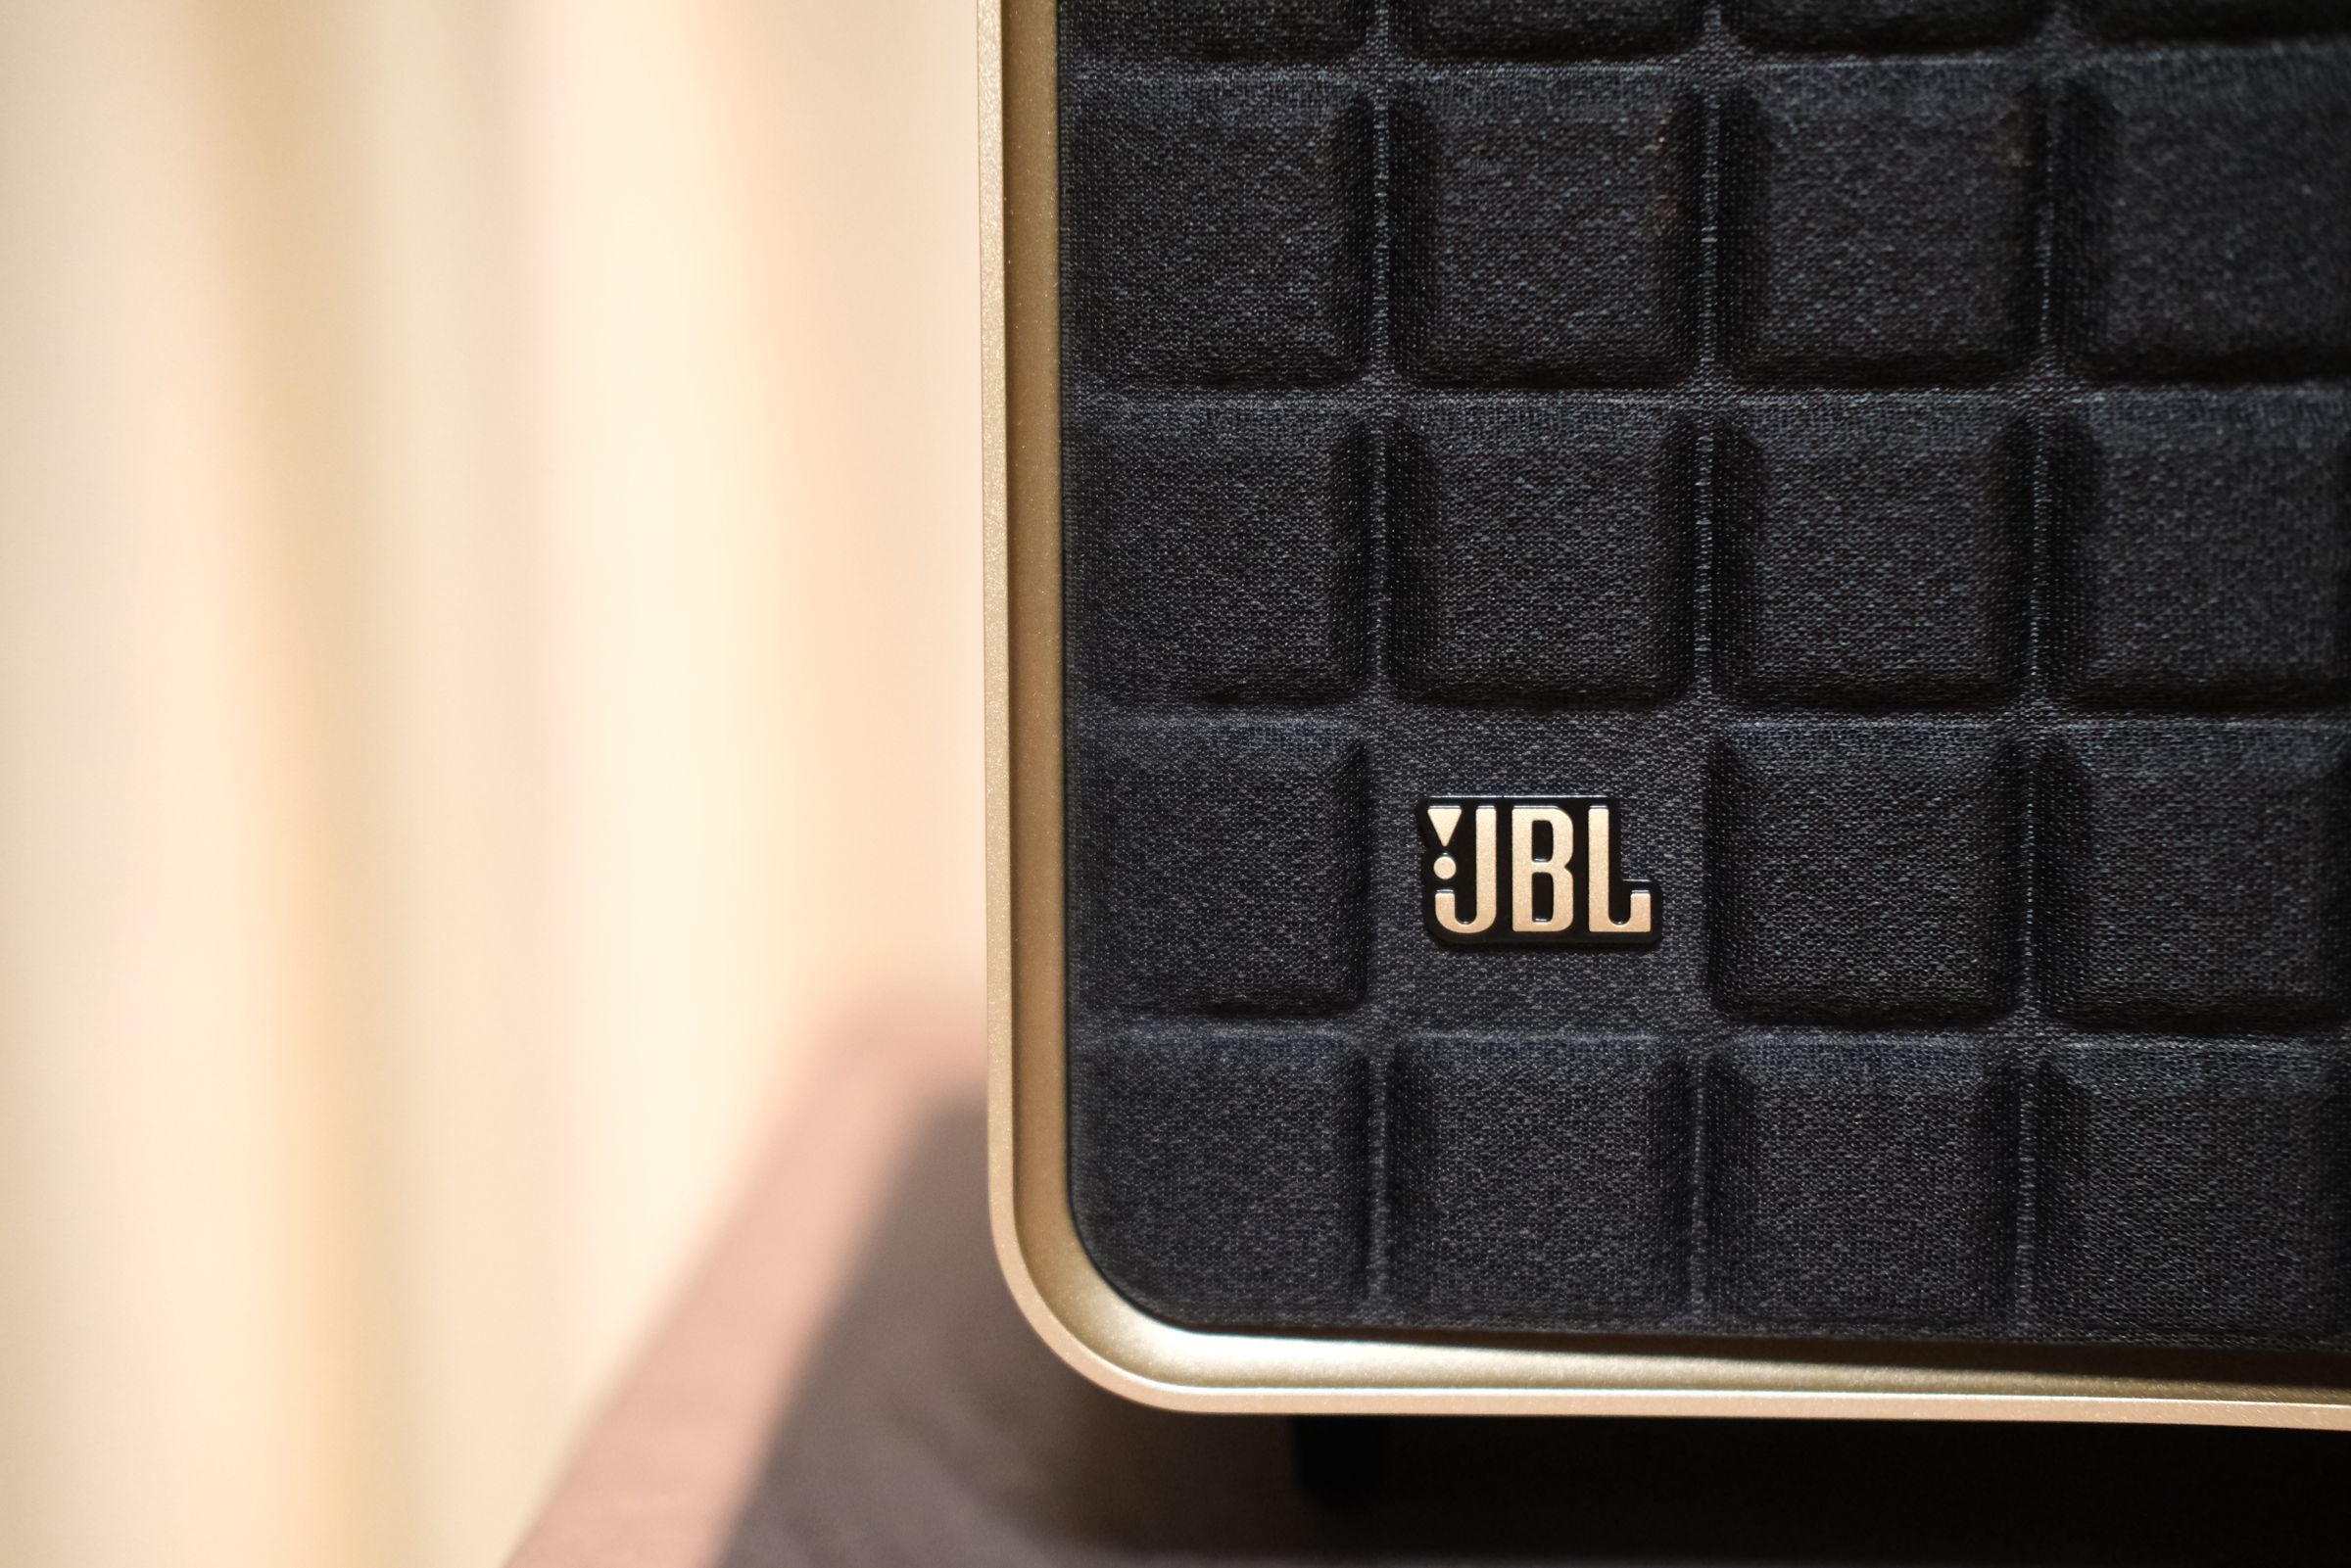 Close up of JBL logo on speaker grill.